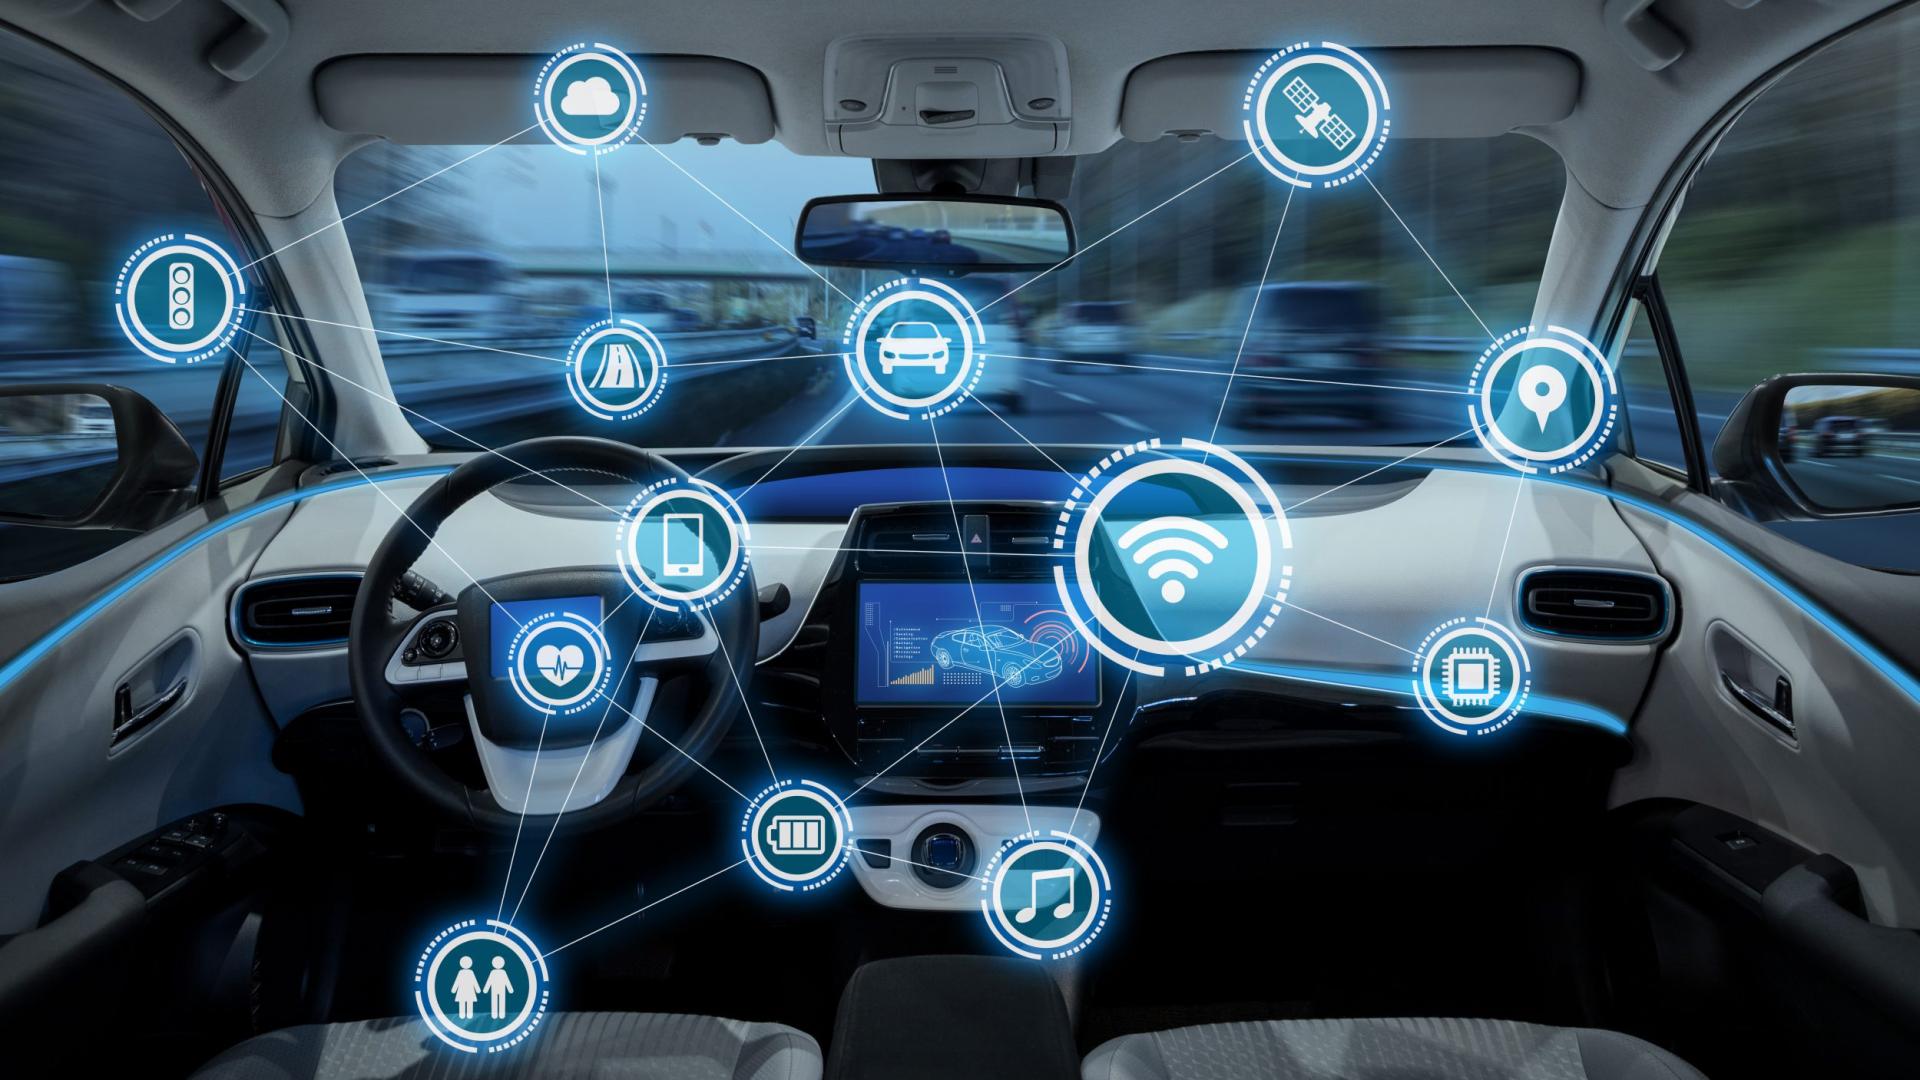 BMW, Daimler plan cooperation in autonomous driving: report